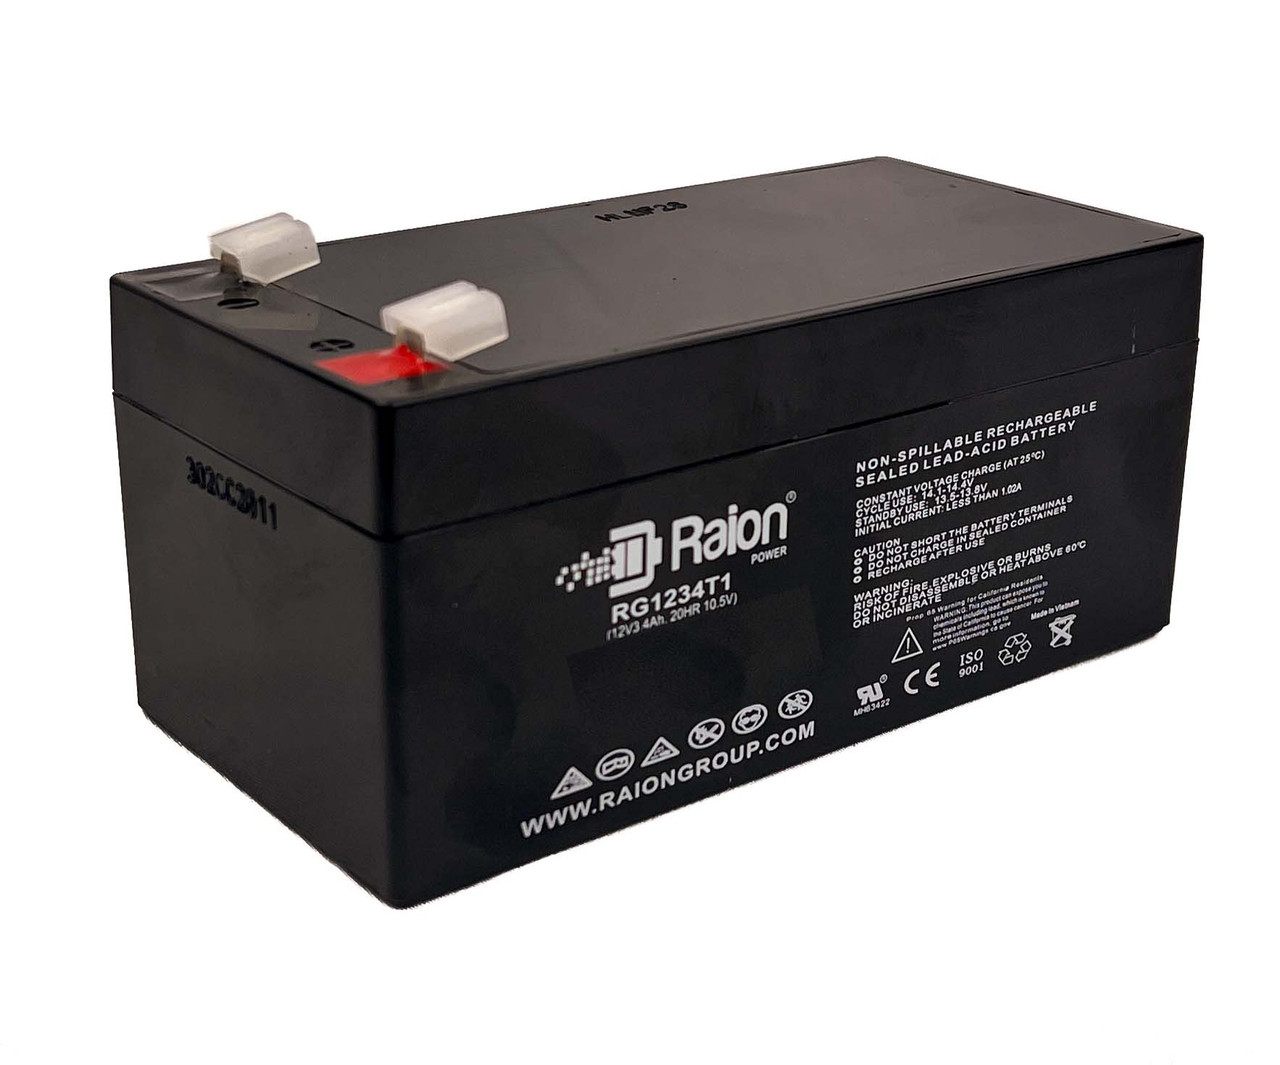 Raion Power 12V 3.4Ah Non-Spillable Replacement Battery for Abbott Laboratories Life Care 900 Volumetric Pump